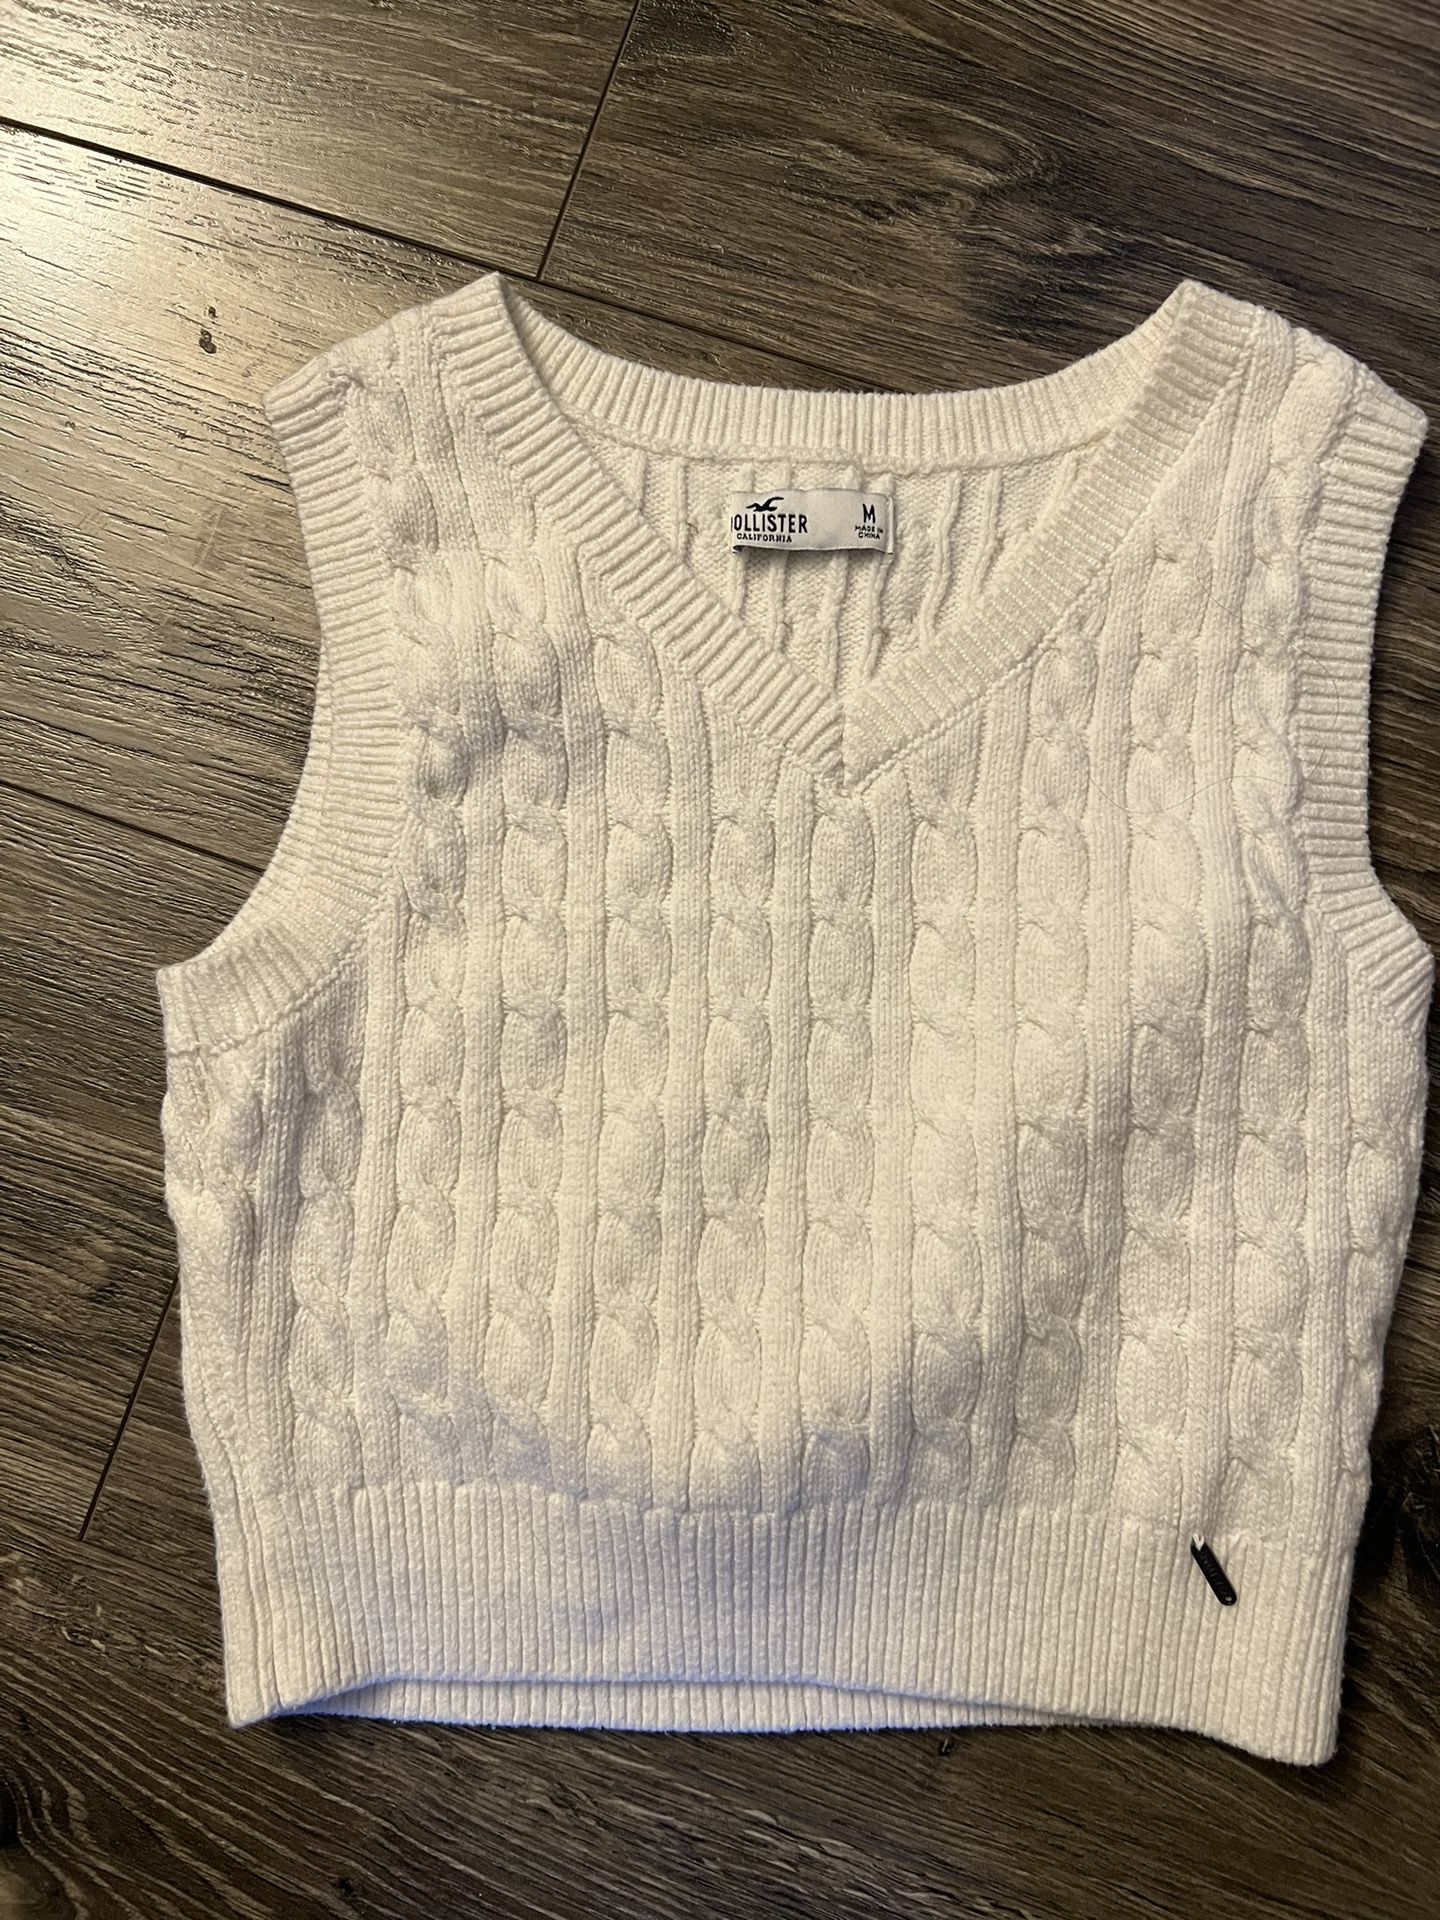 Hollister Cropped Sweater Vest Size Medium - White